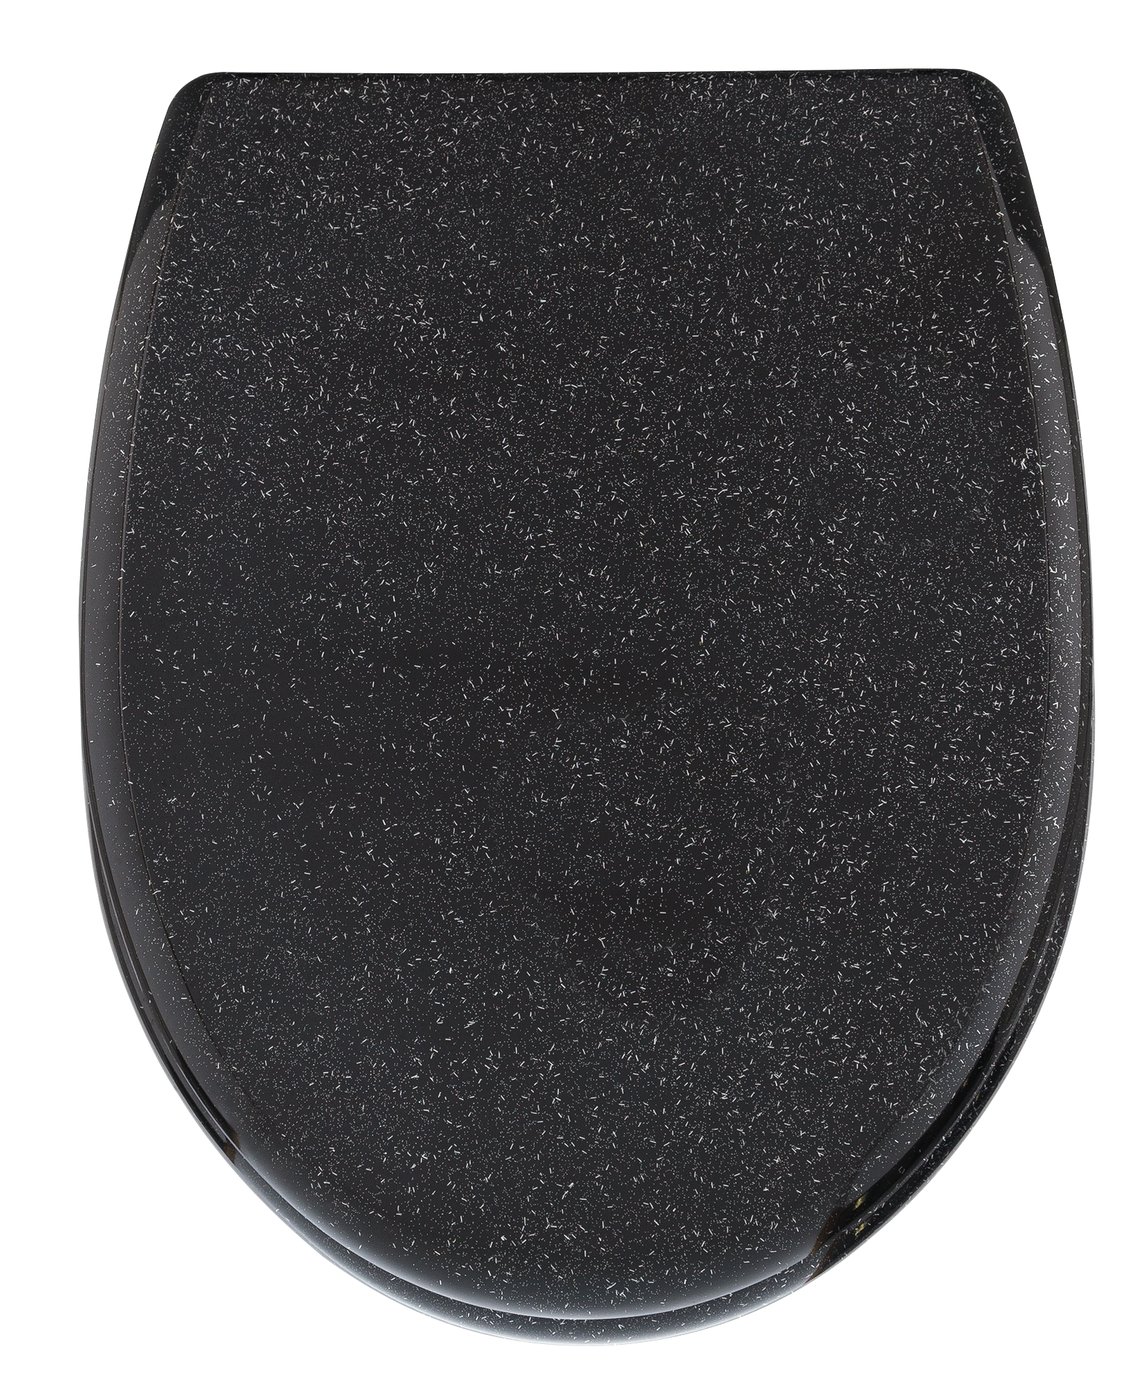 black toilet lid cover